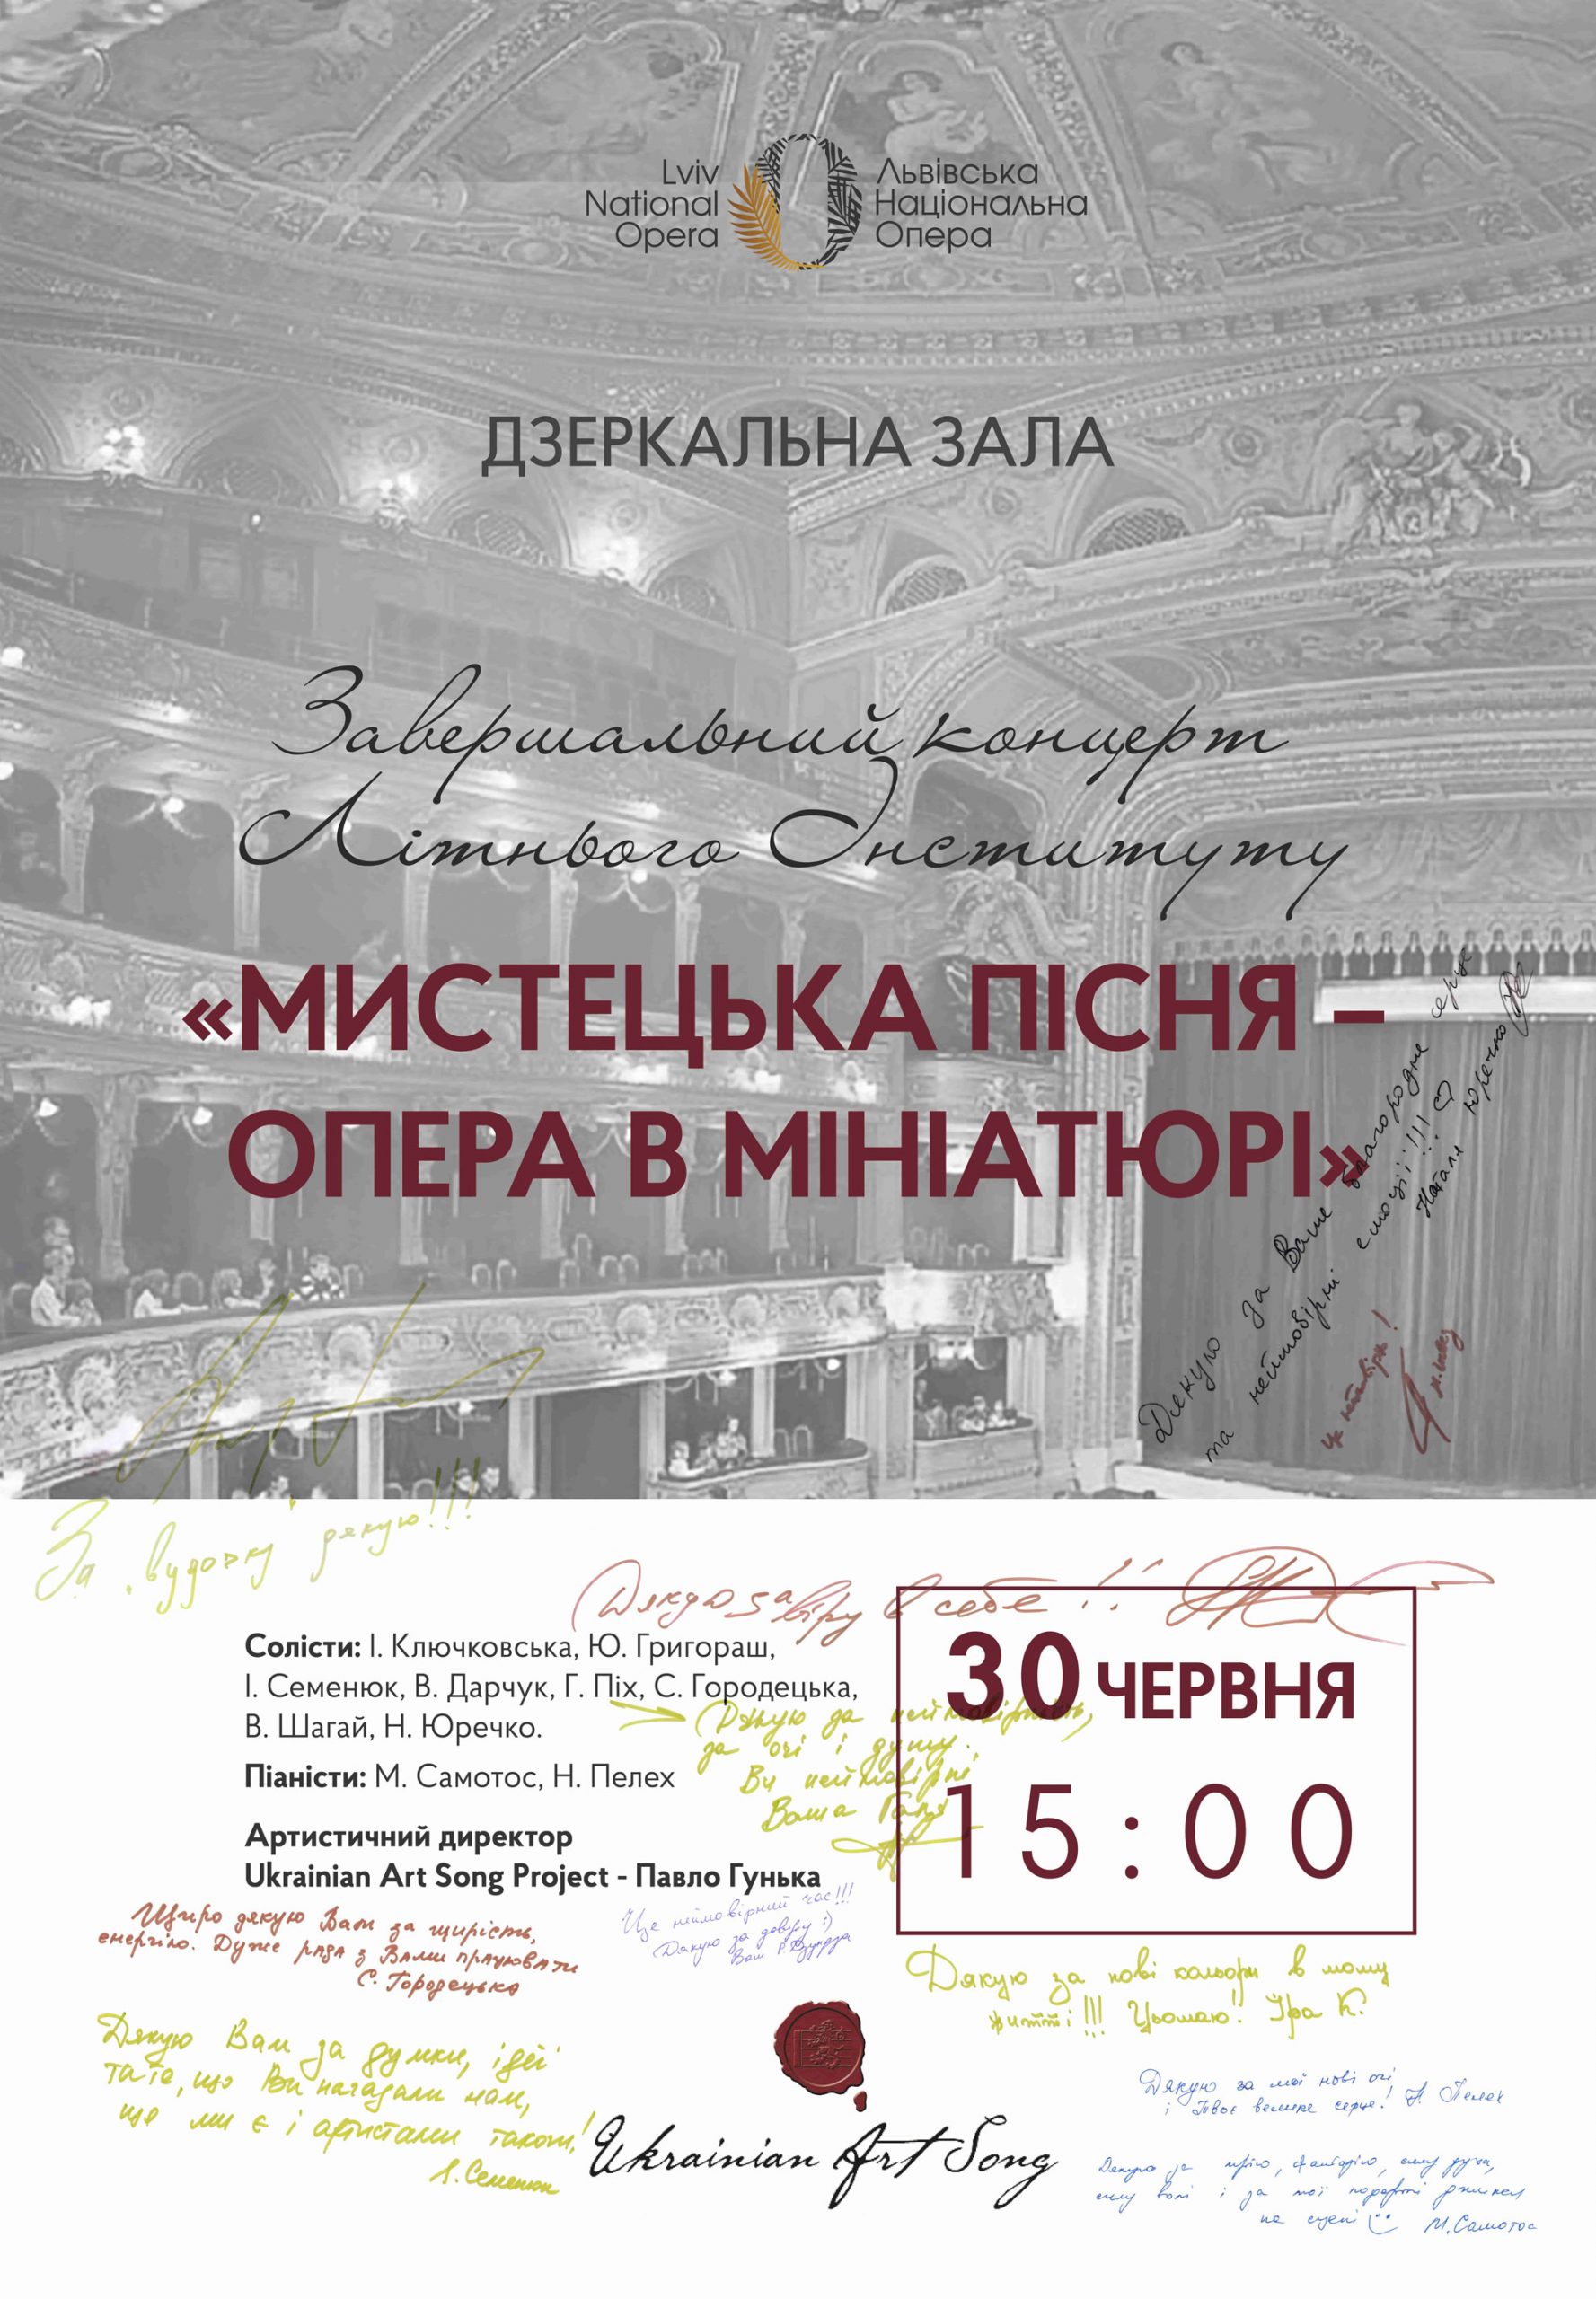 UASP Institute - 'Opera In Miniature' - Signed by all the artists - Lviv Opera House, Ukraine - June 2019